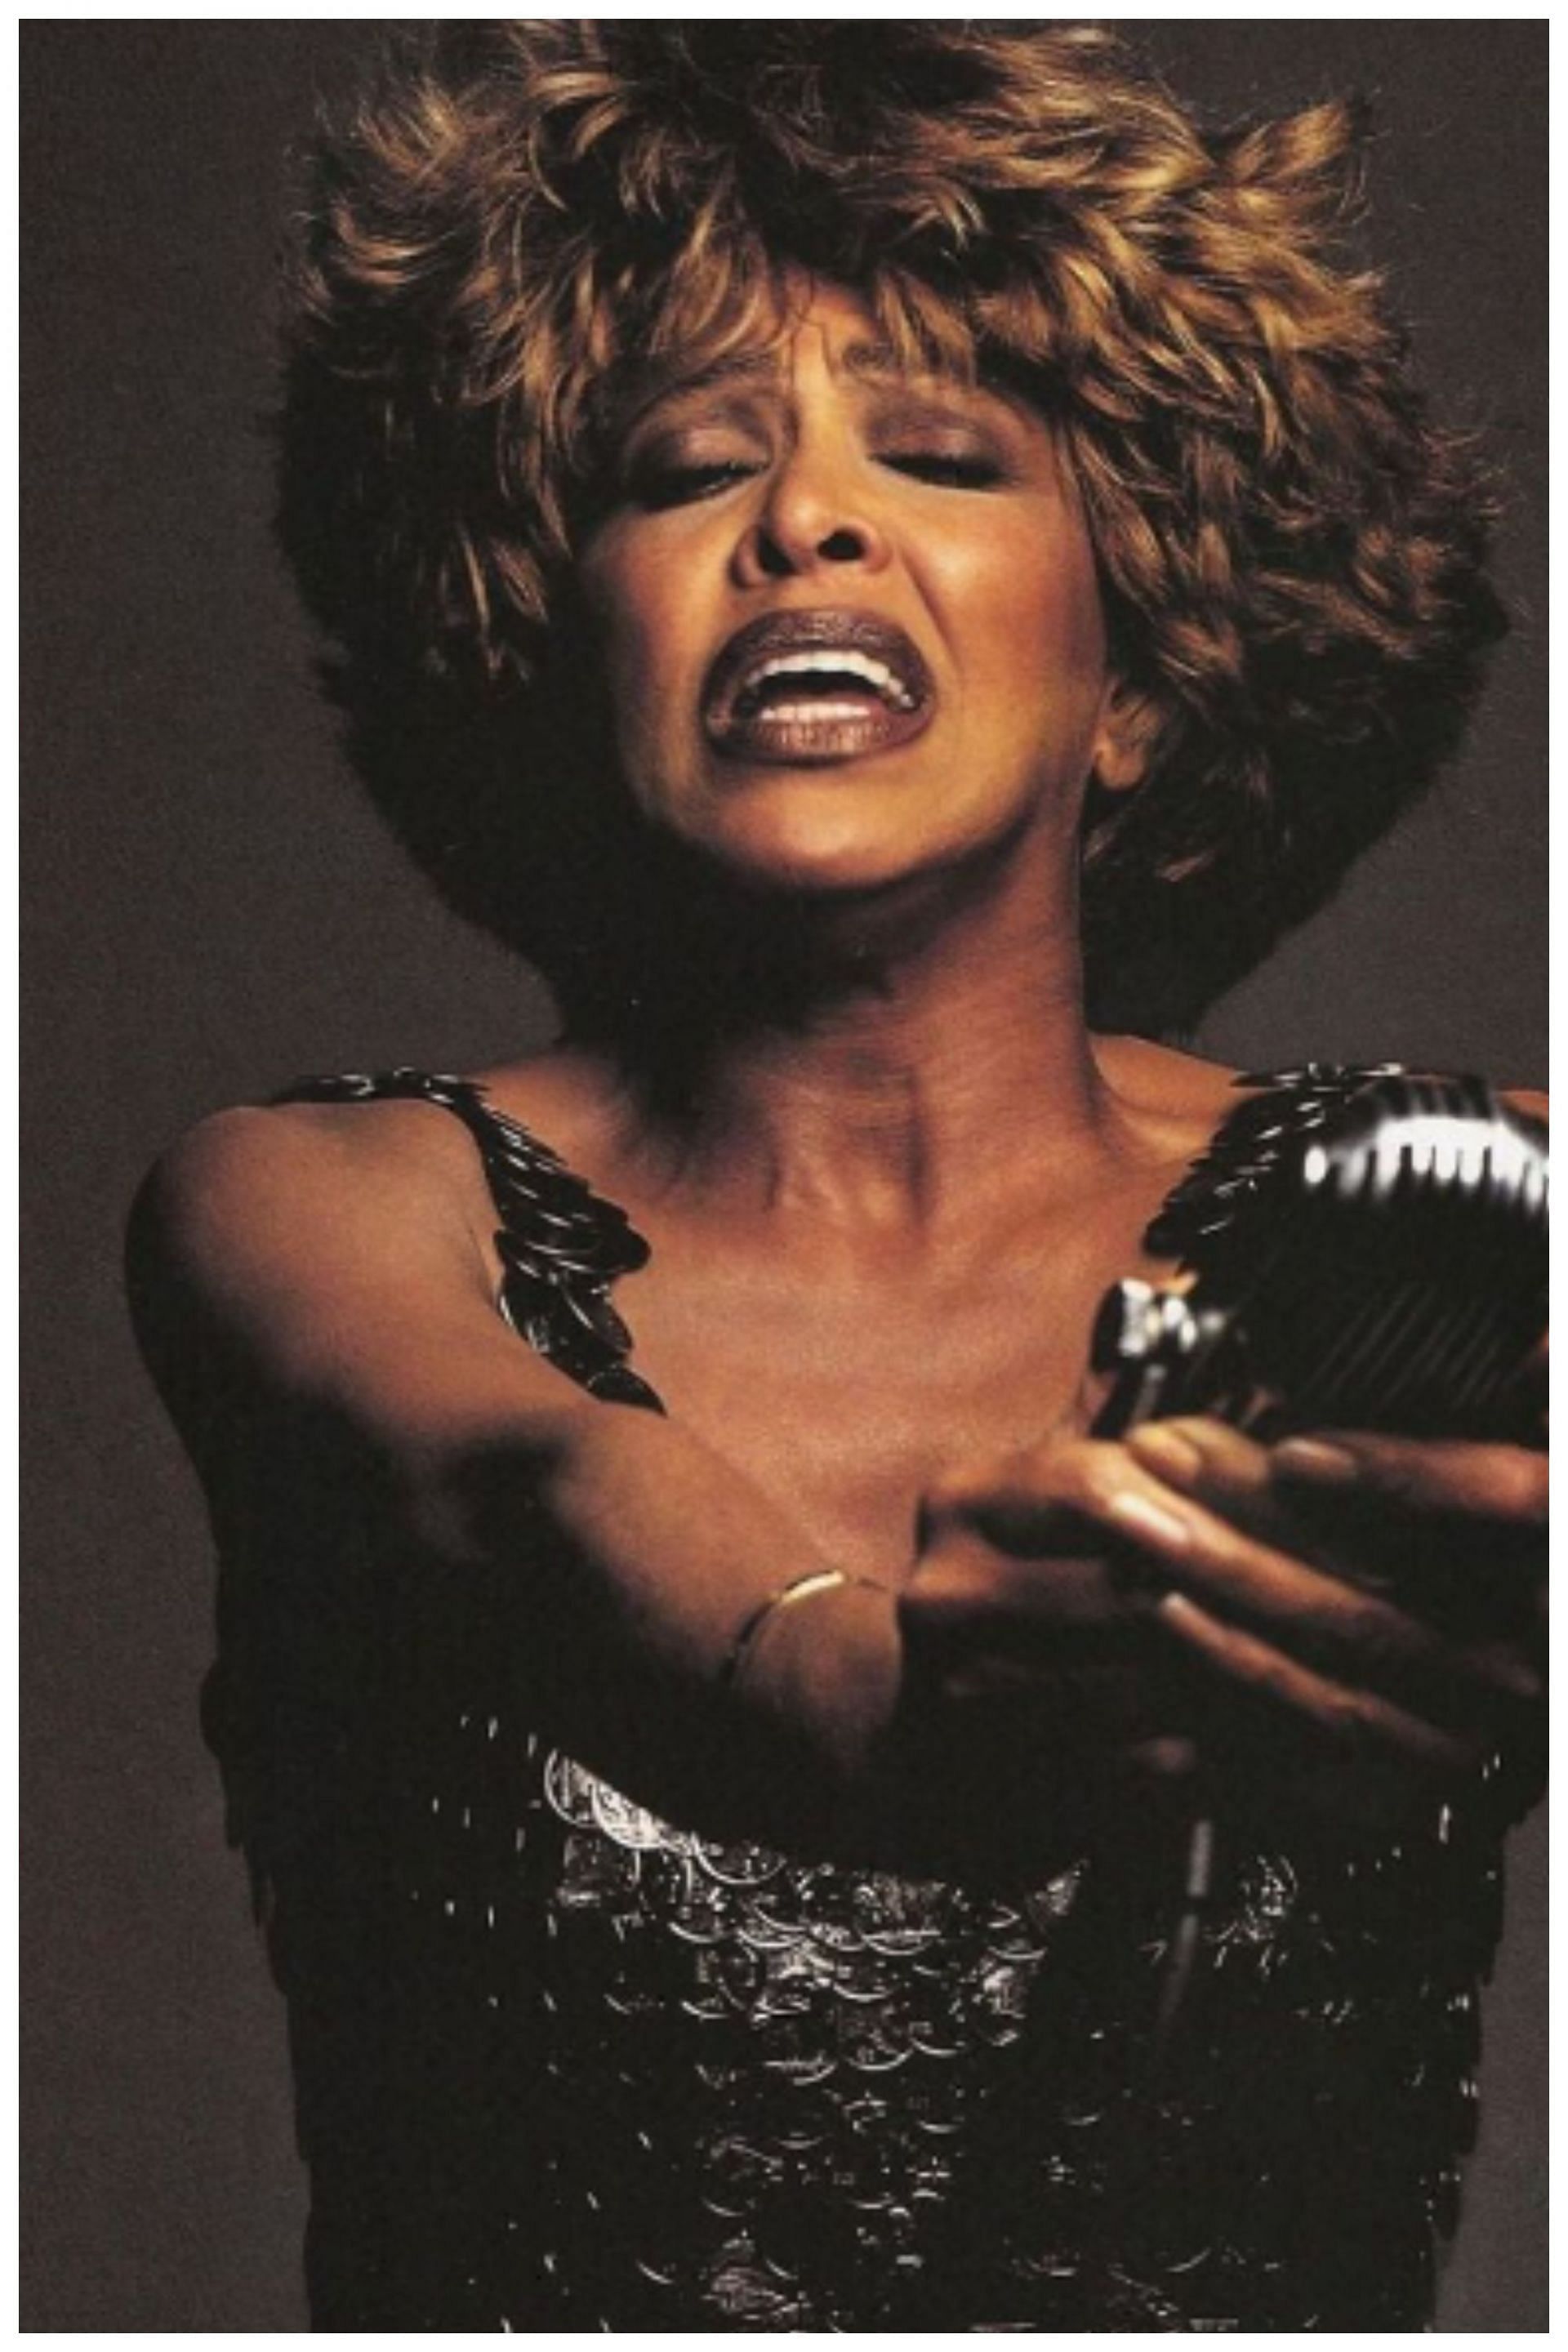 Tina Turner (Image via IG @thierryklifa)